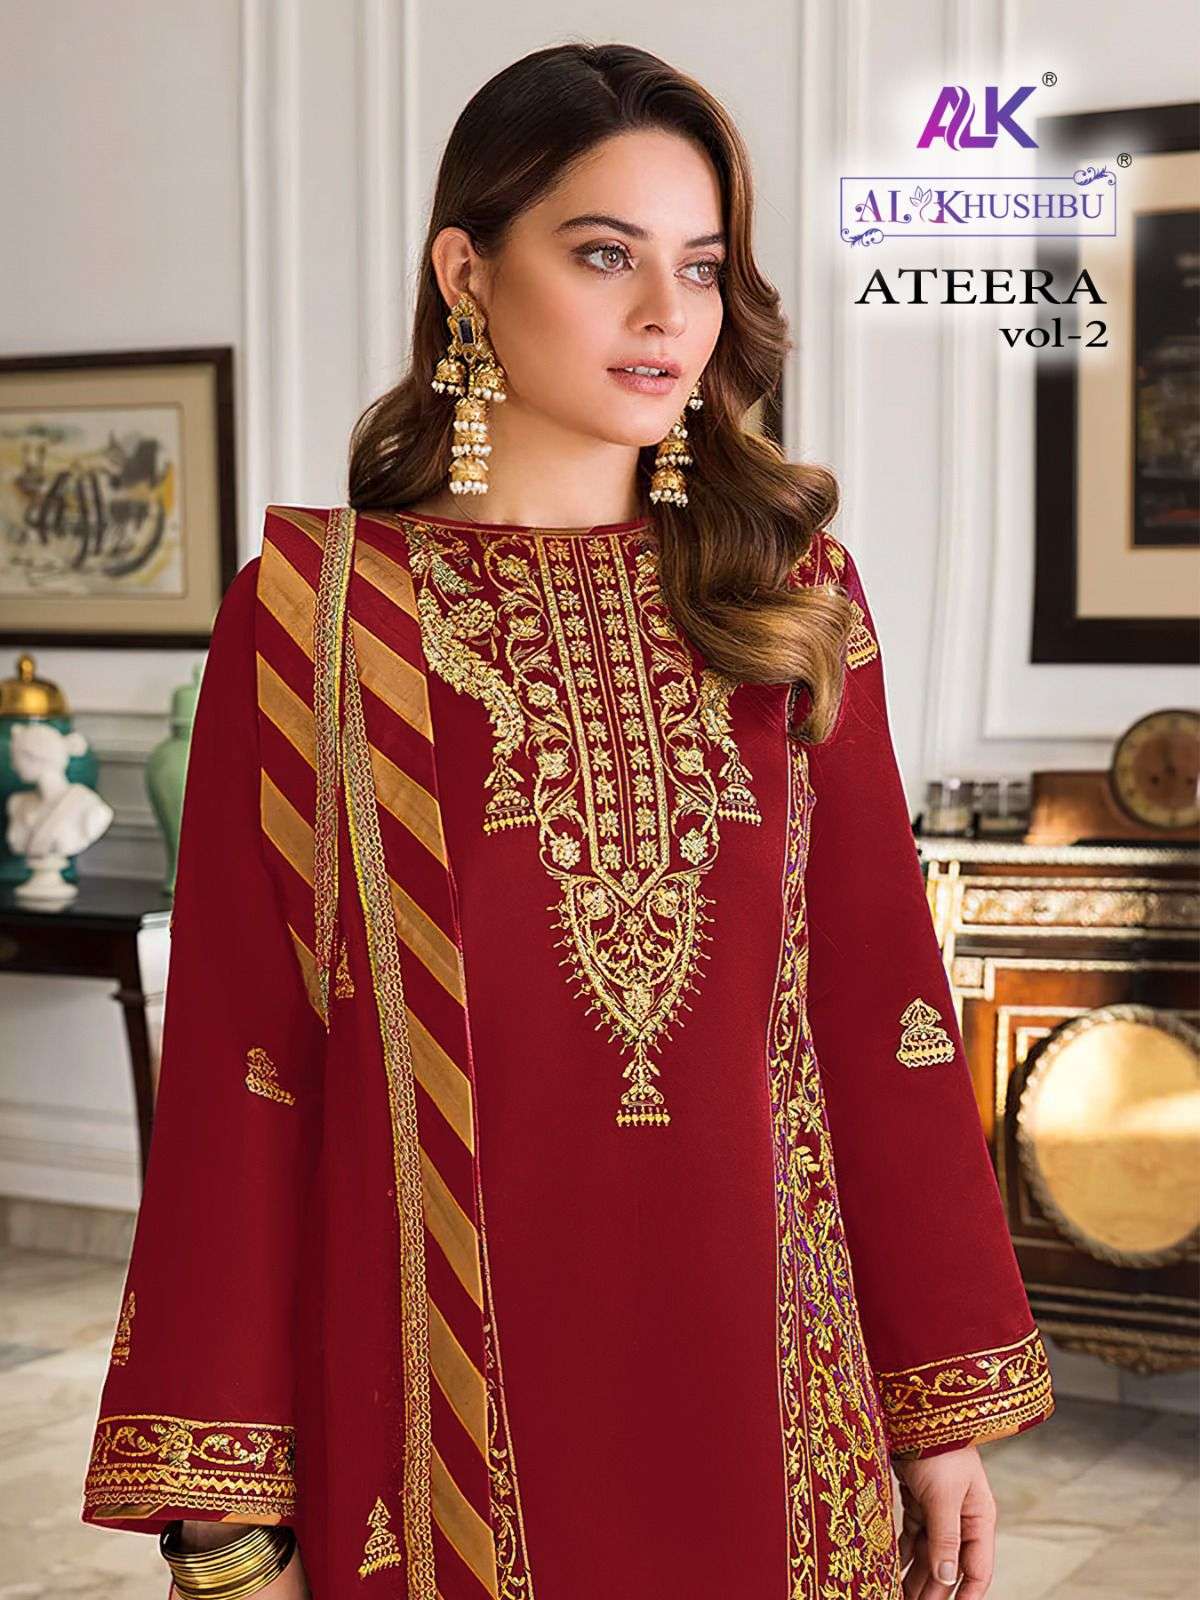 al khushbu ateera vol 2 designer unstitch pakistani suit with embroidery work